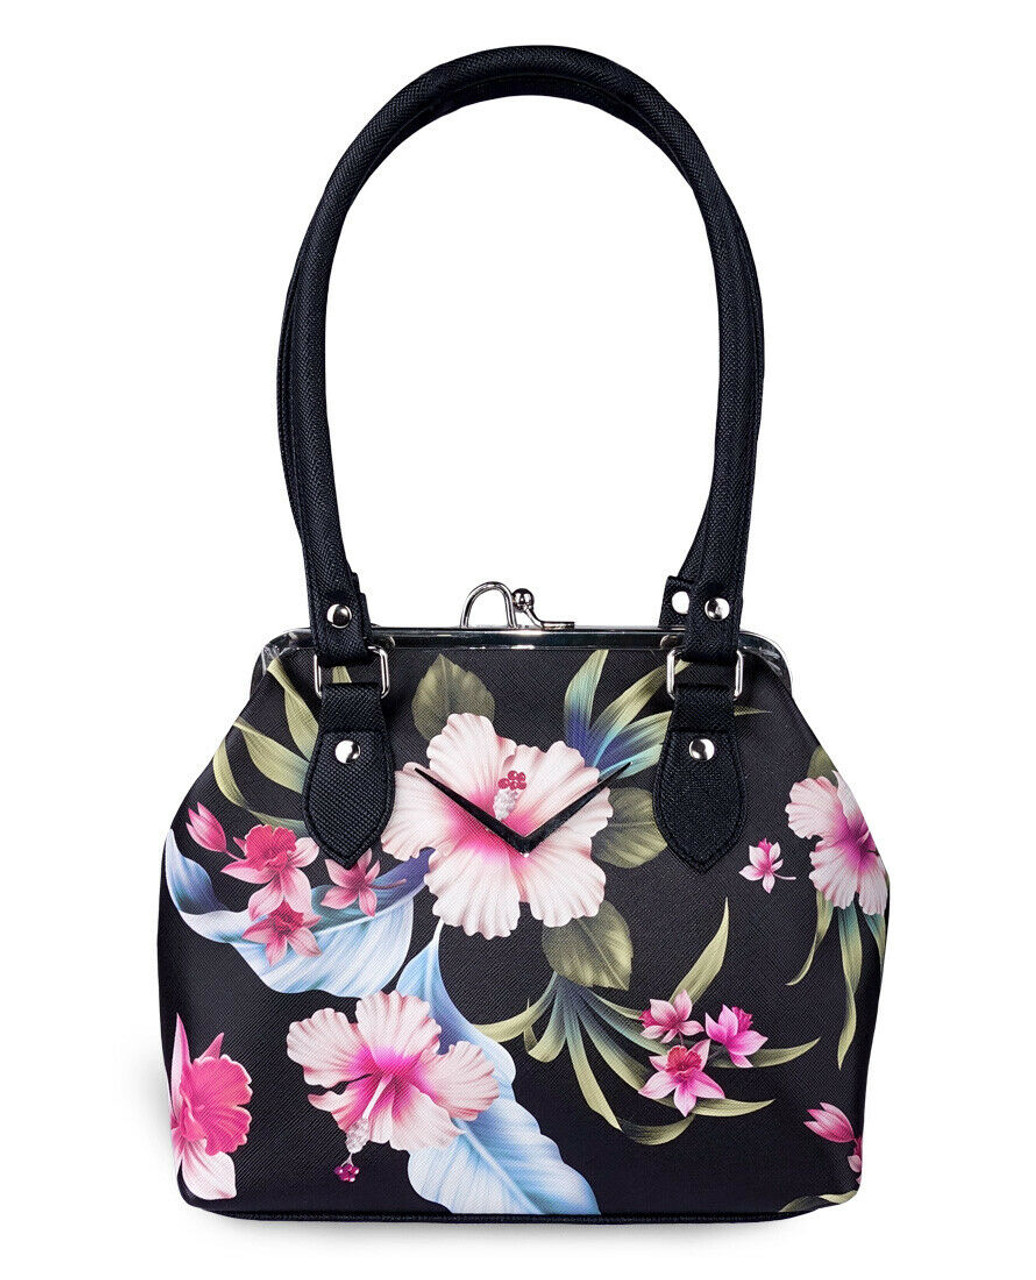 Relic Brand Floral Purse Handbag With Wooden... - Depop